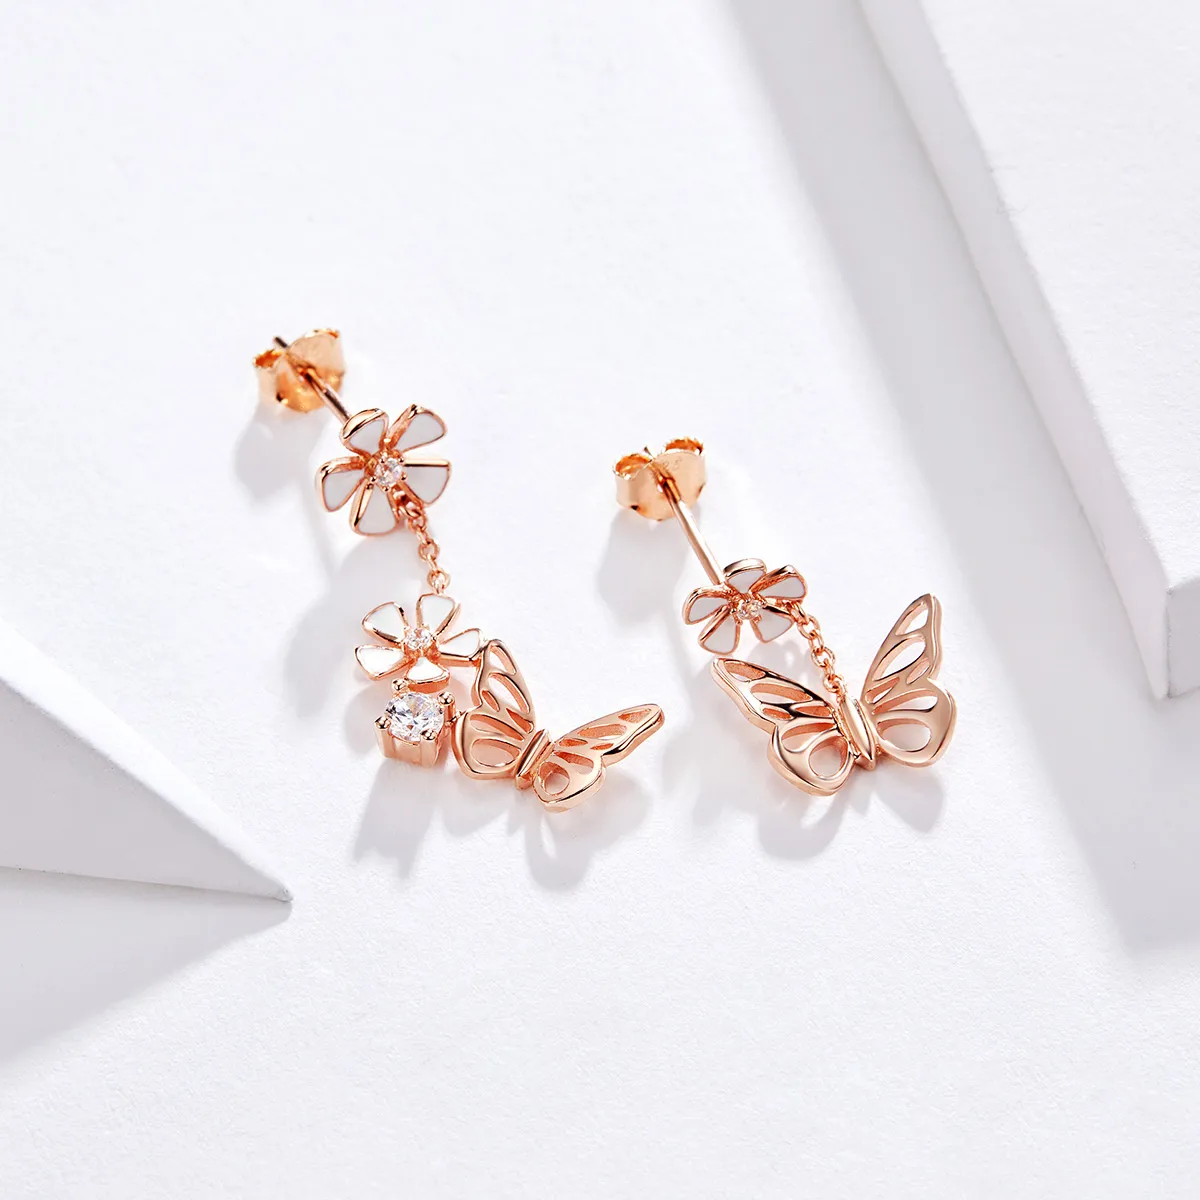 Pandora Style Rose Gold Dancing Butterfly Dangle Earrings - BSE100